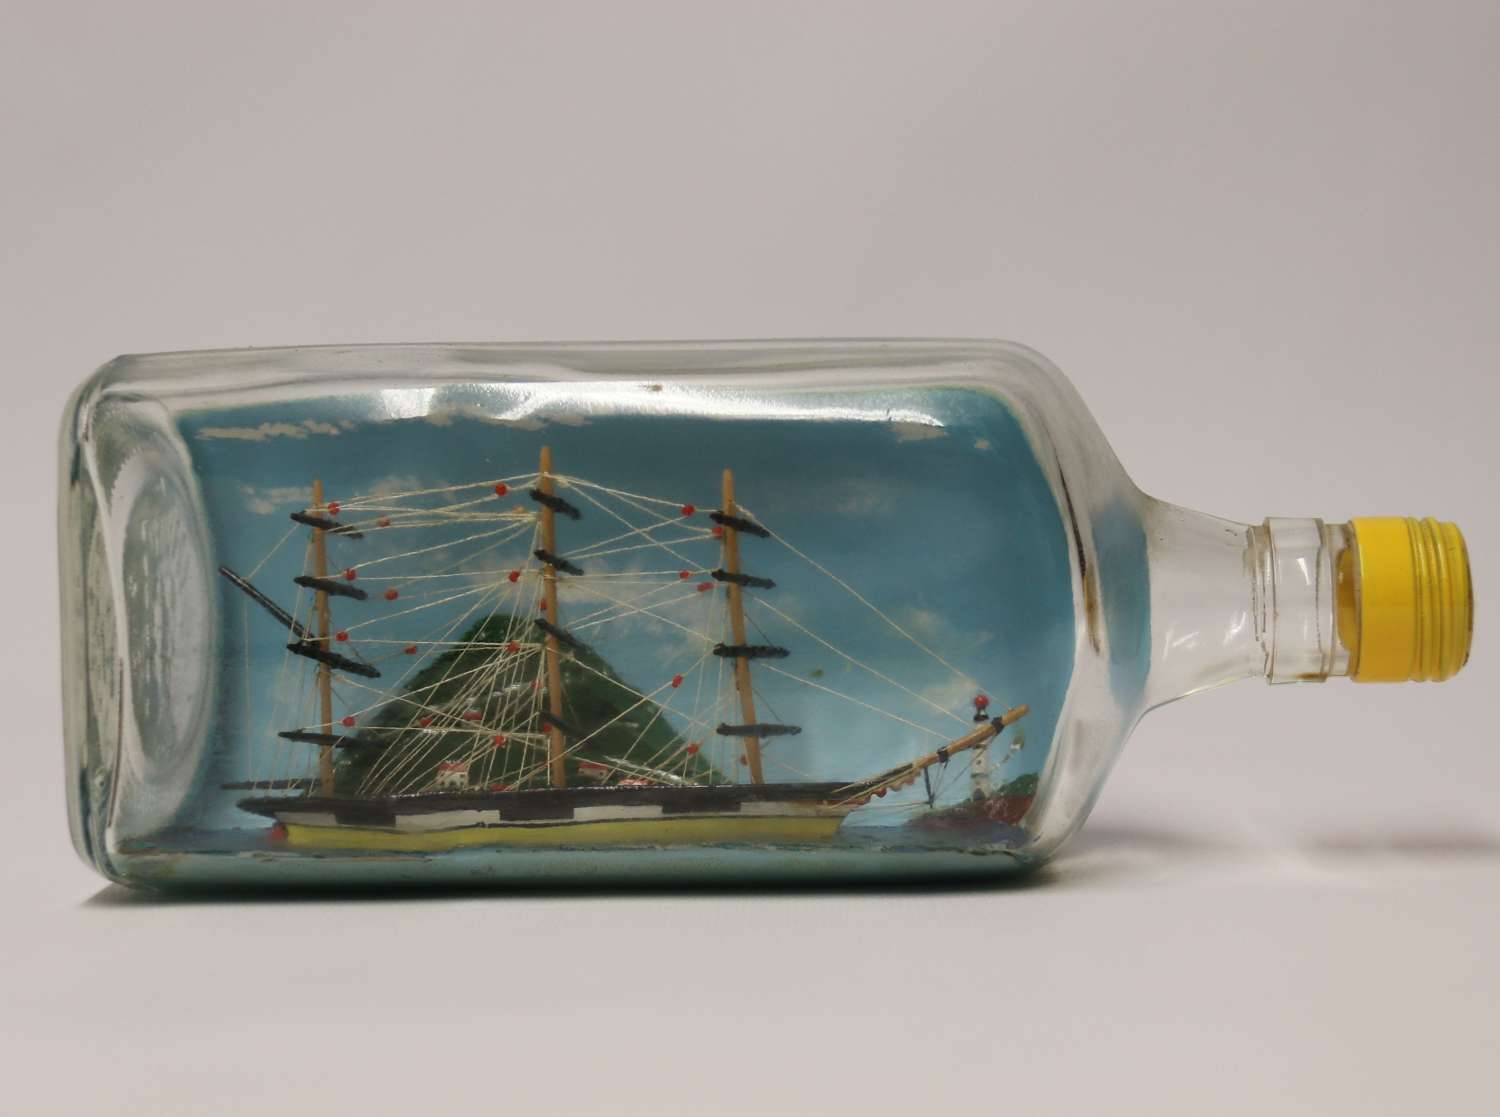 A Fine Diorama folk art model ship in a bottle